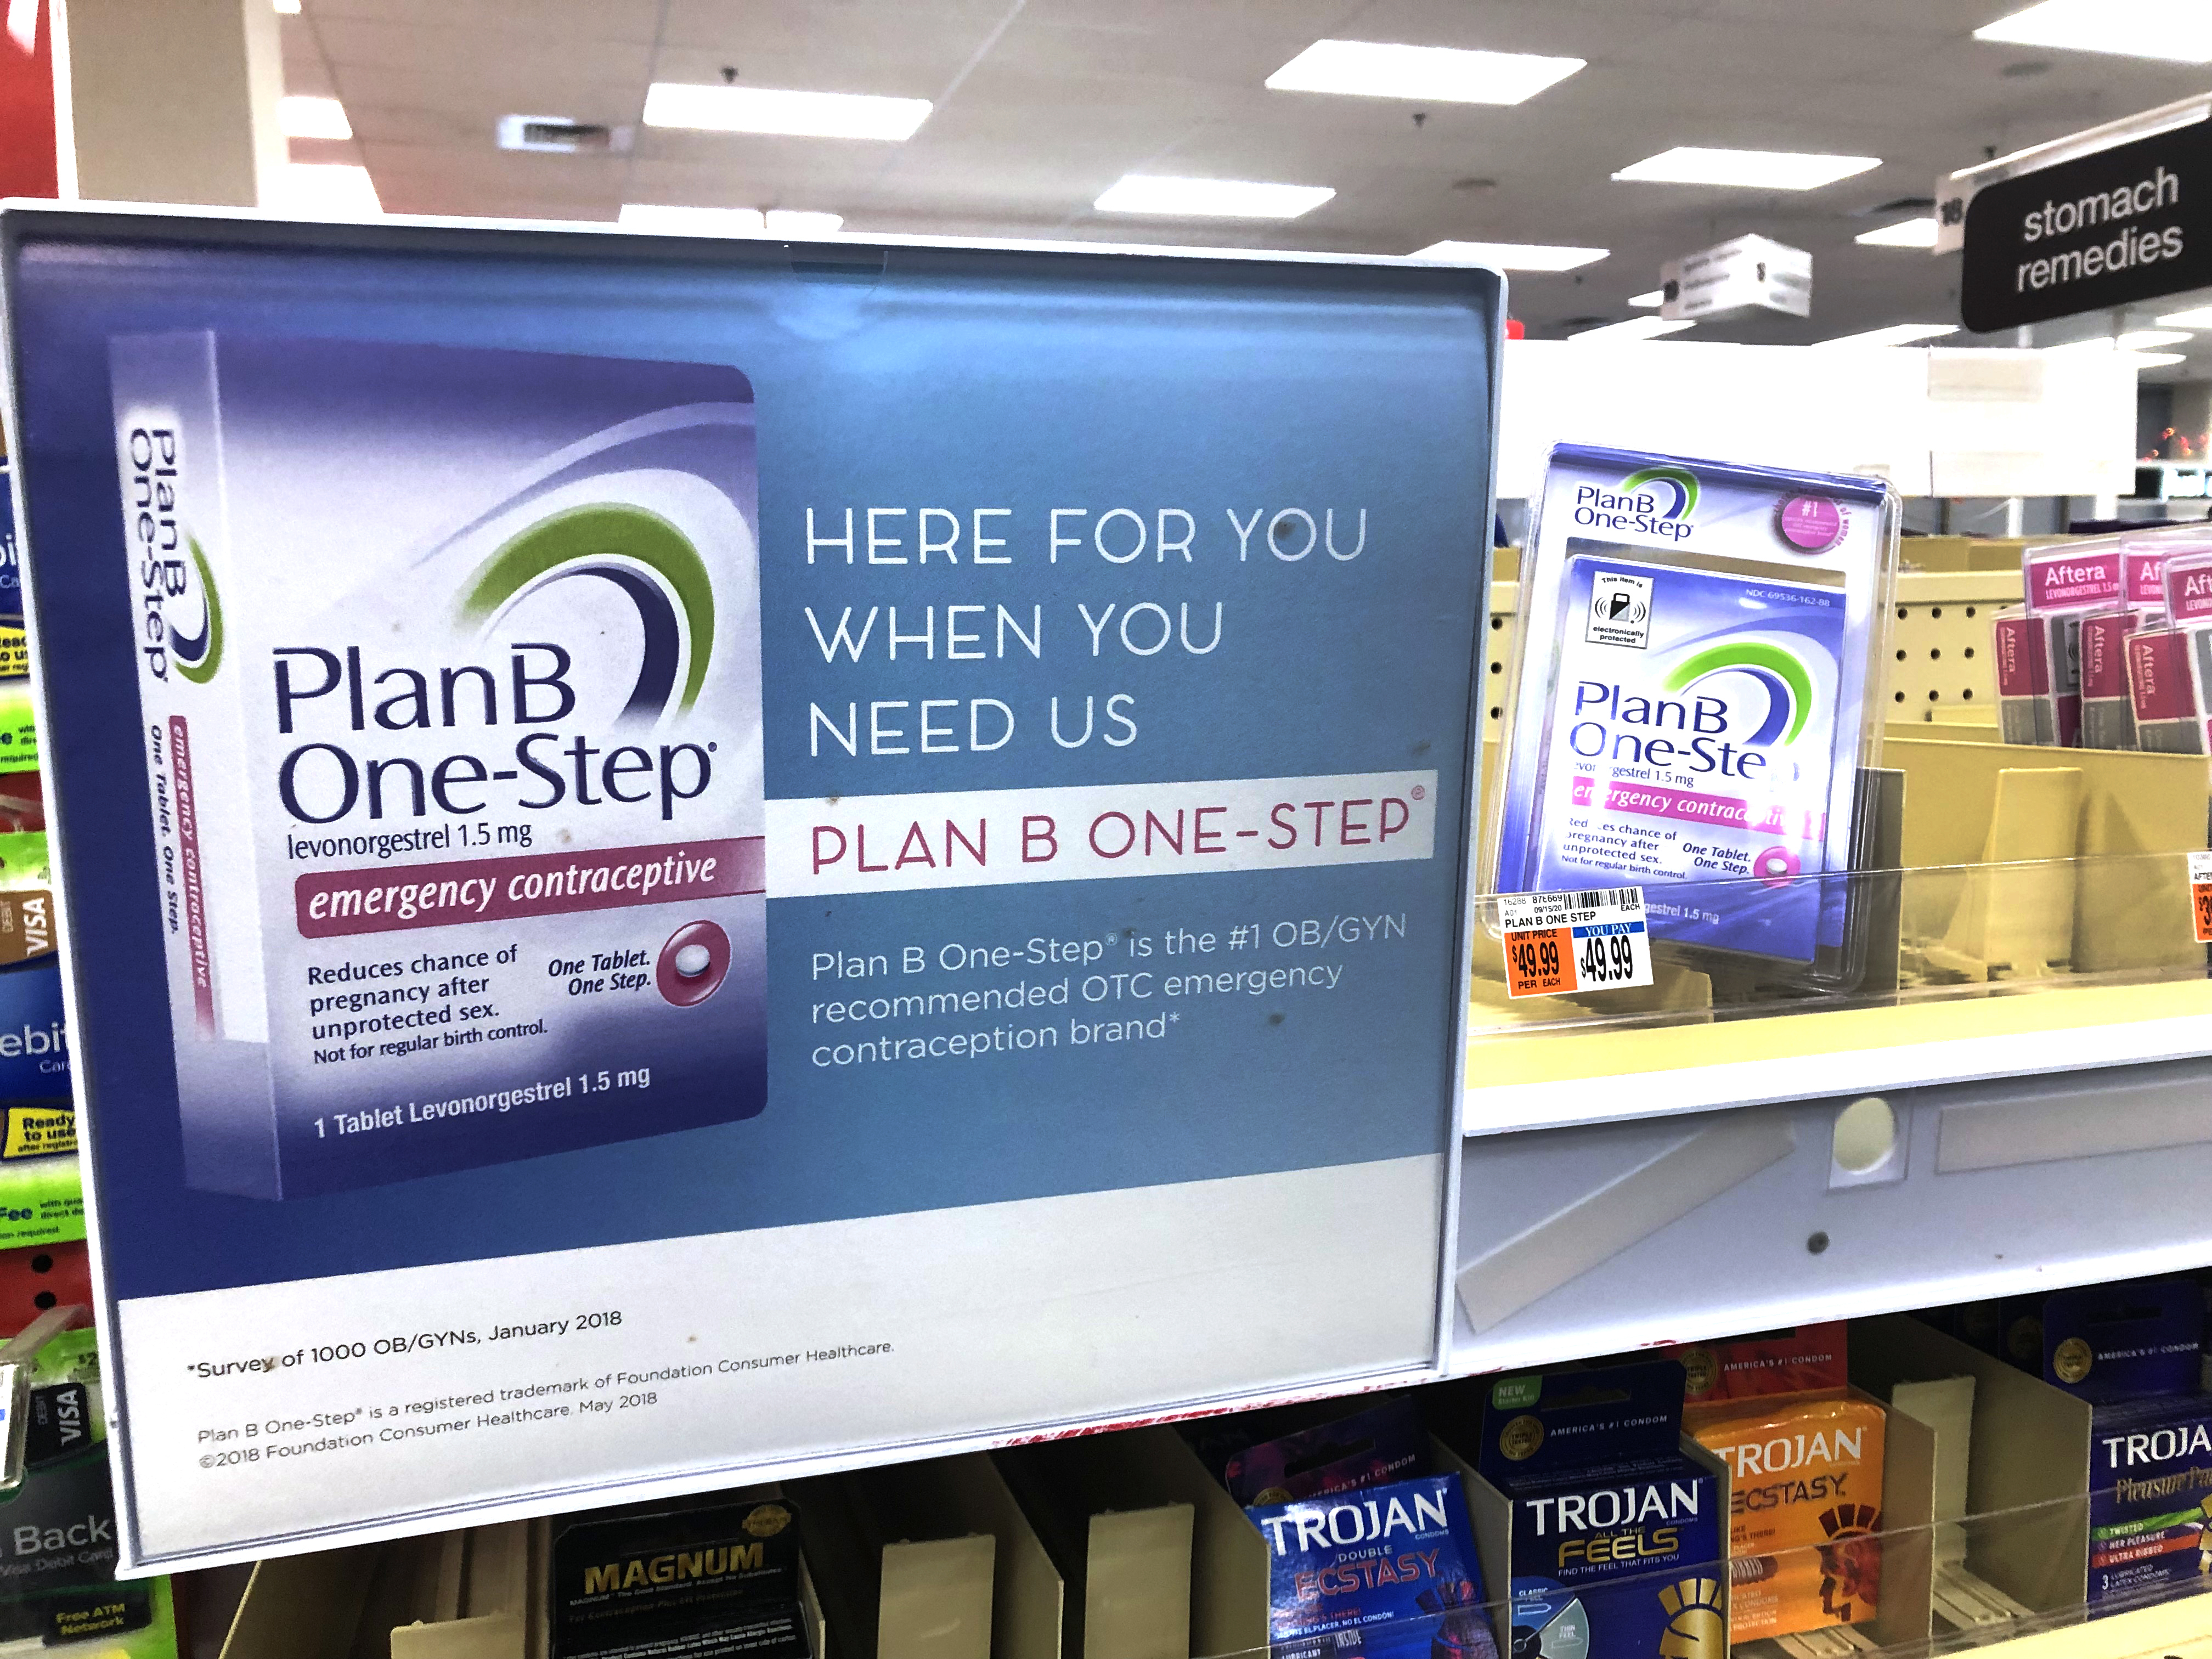 Plan B One-Step Pills